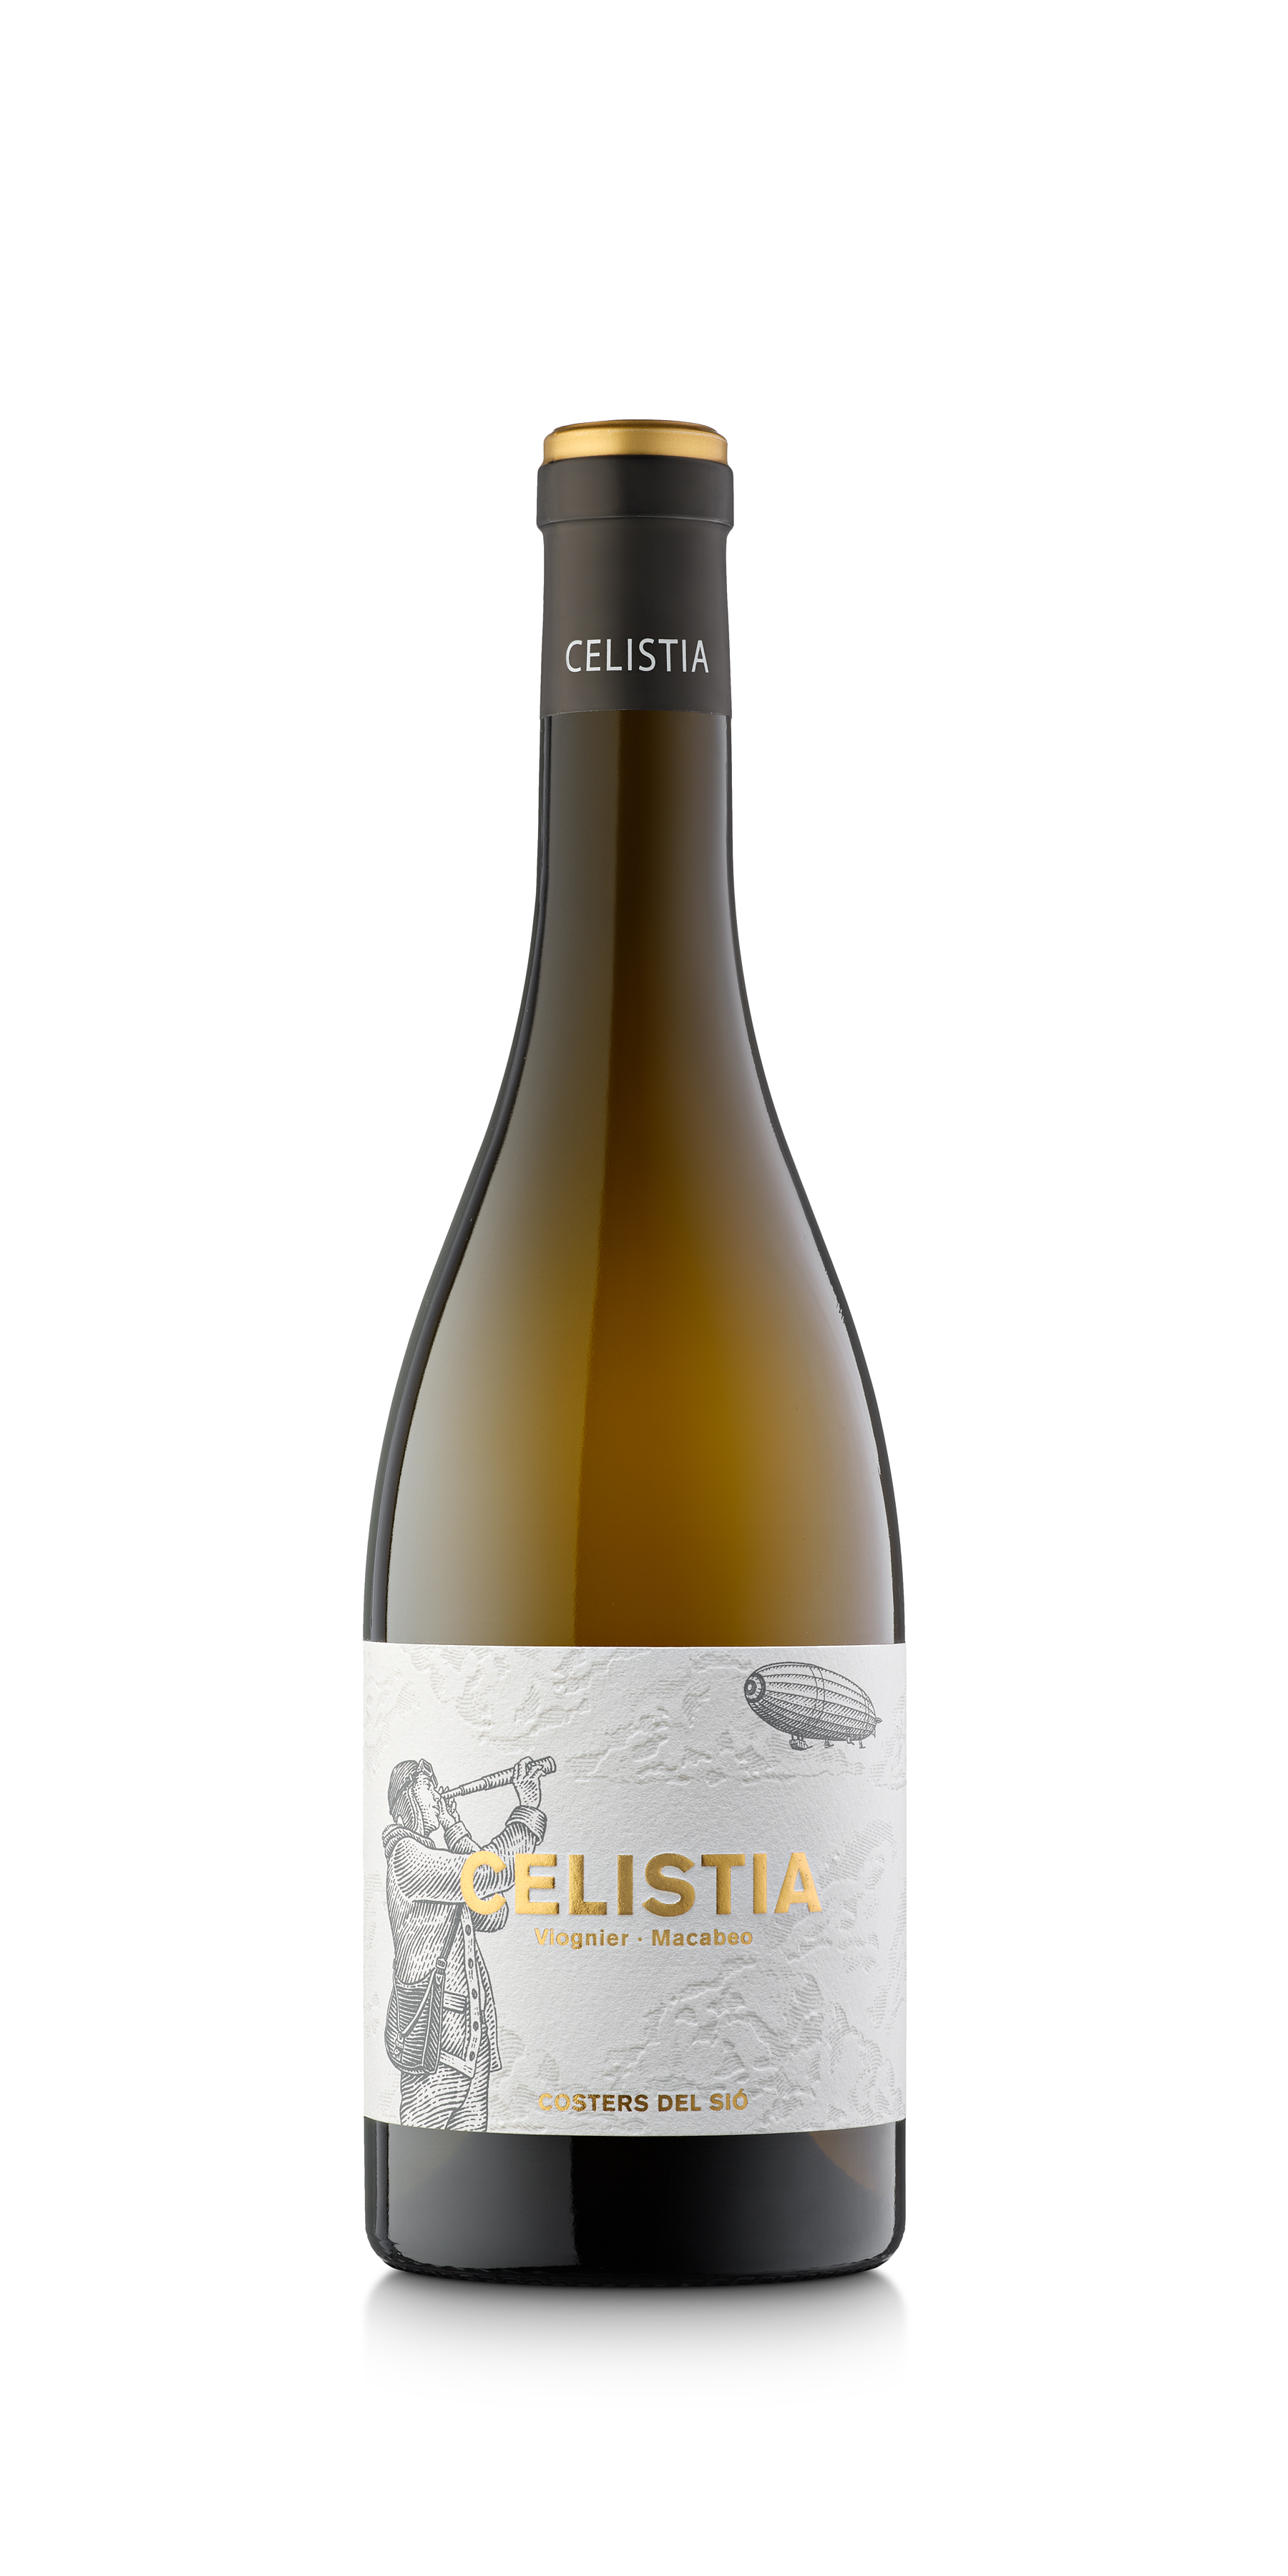  Celistia - Weißweinflaschen | Costers del Sió Weingut